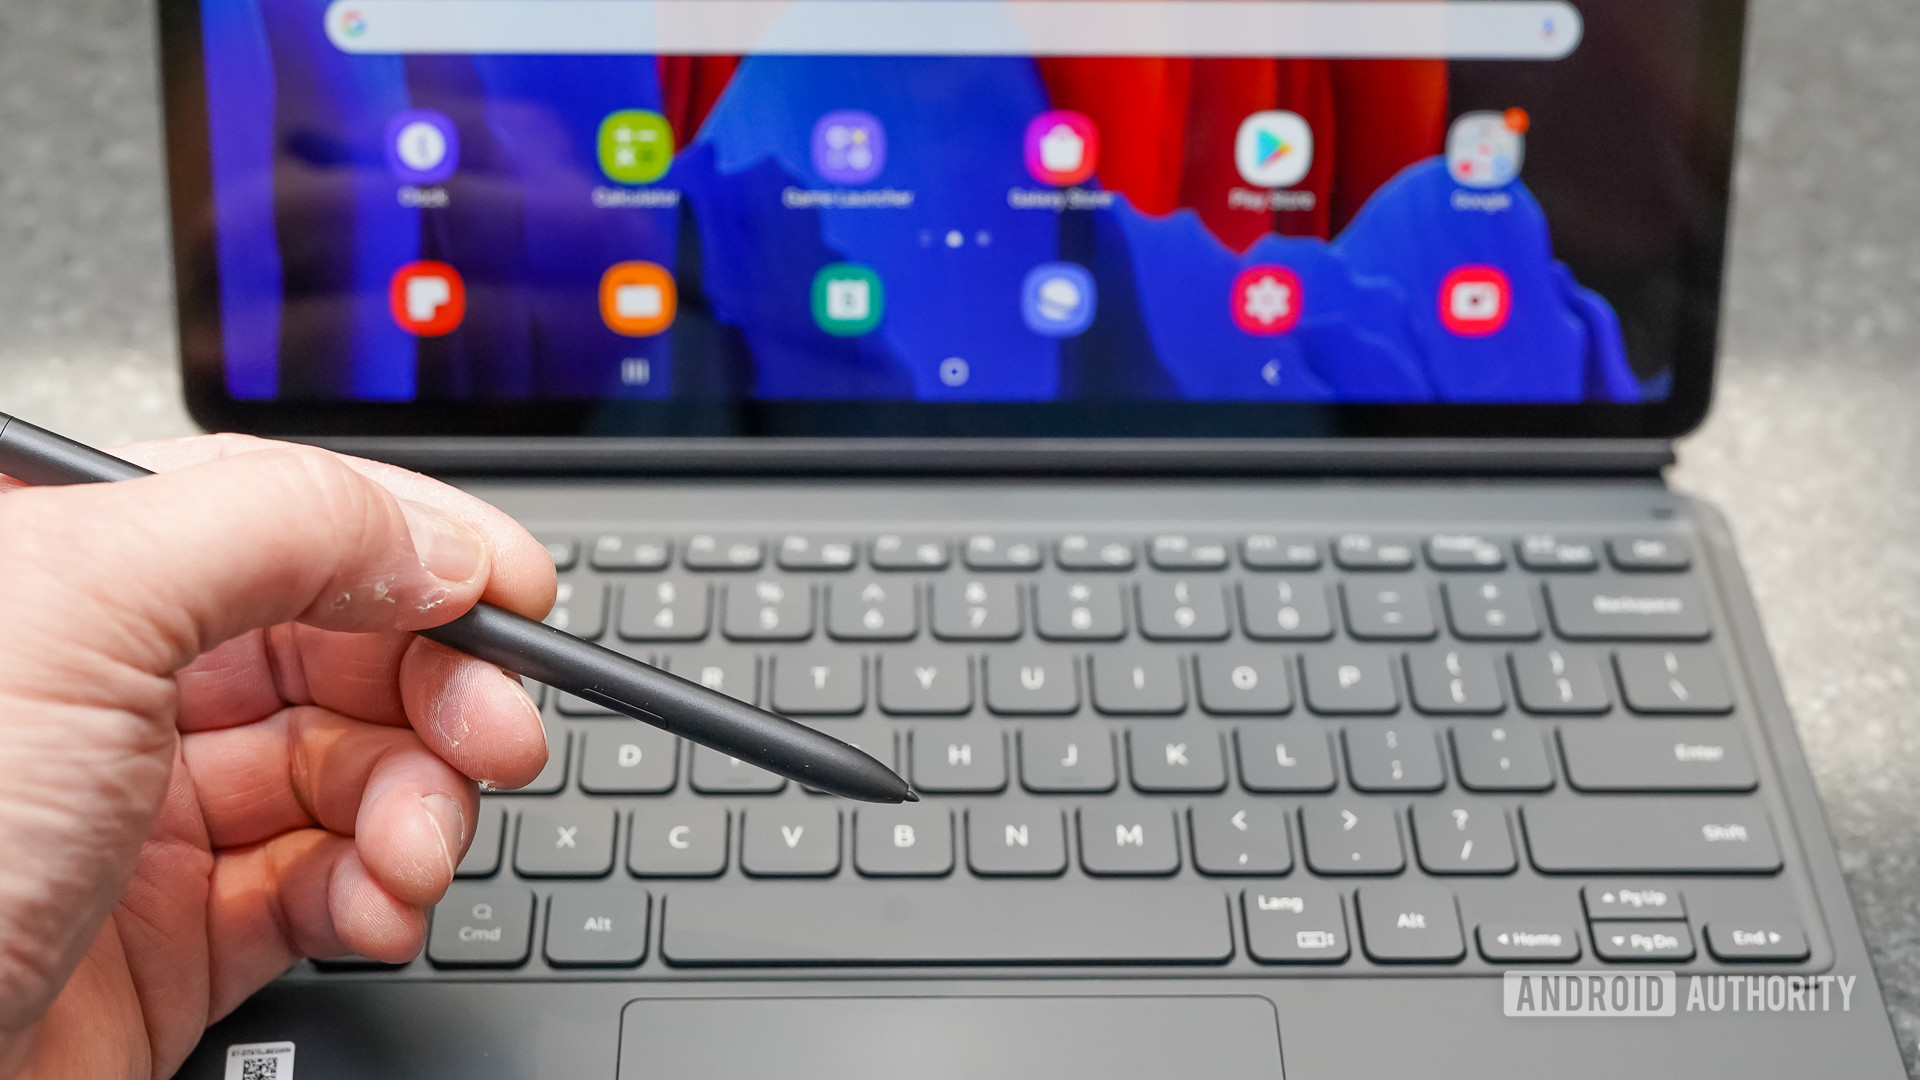 Samsung Galaxy Tab S7 Plus holding the S Pen